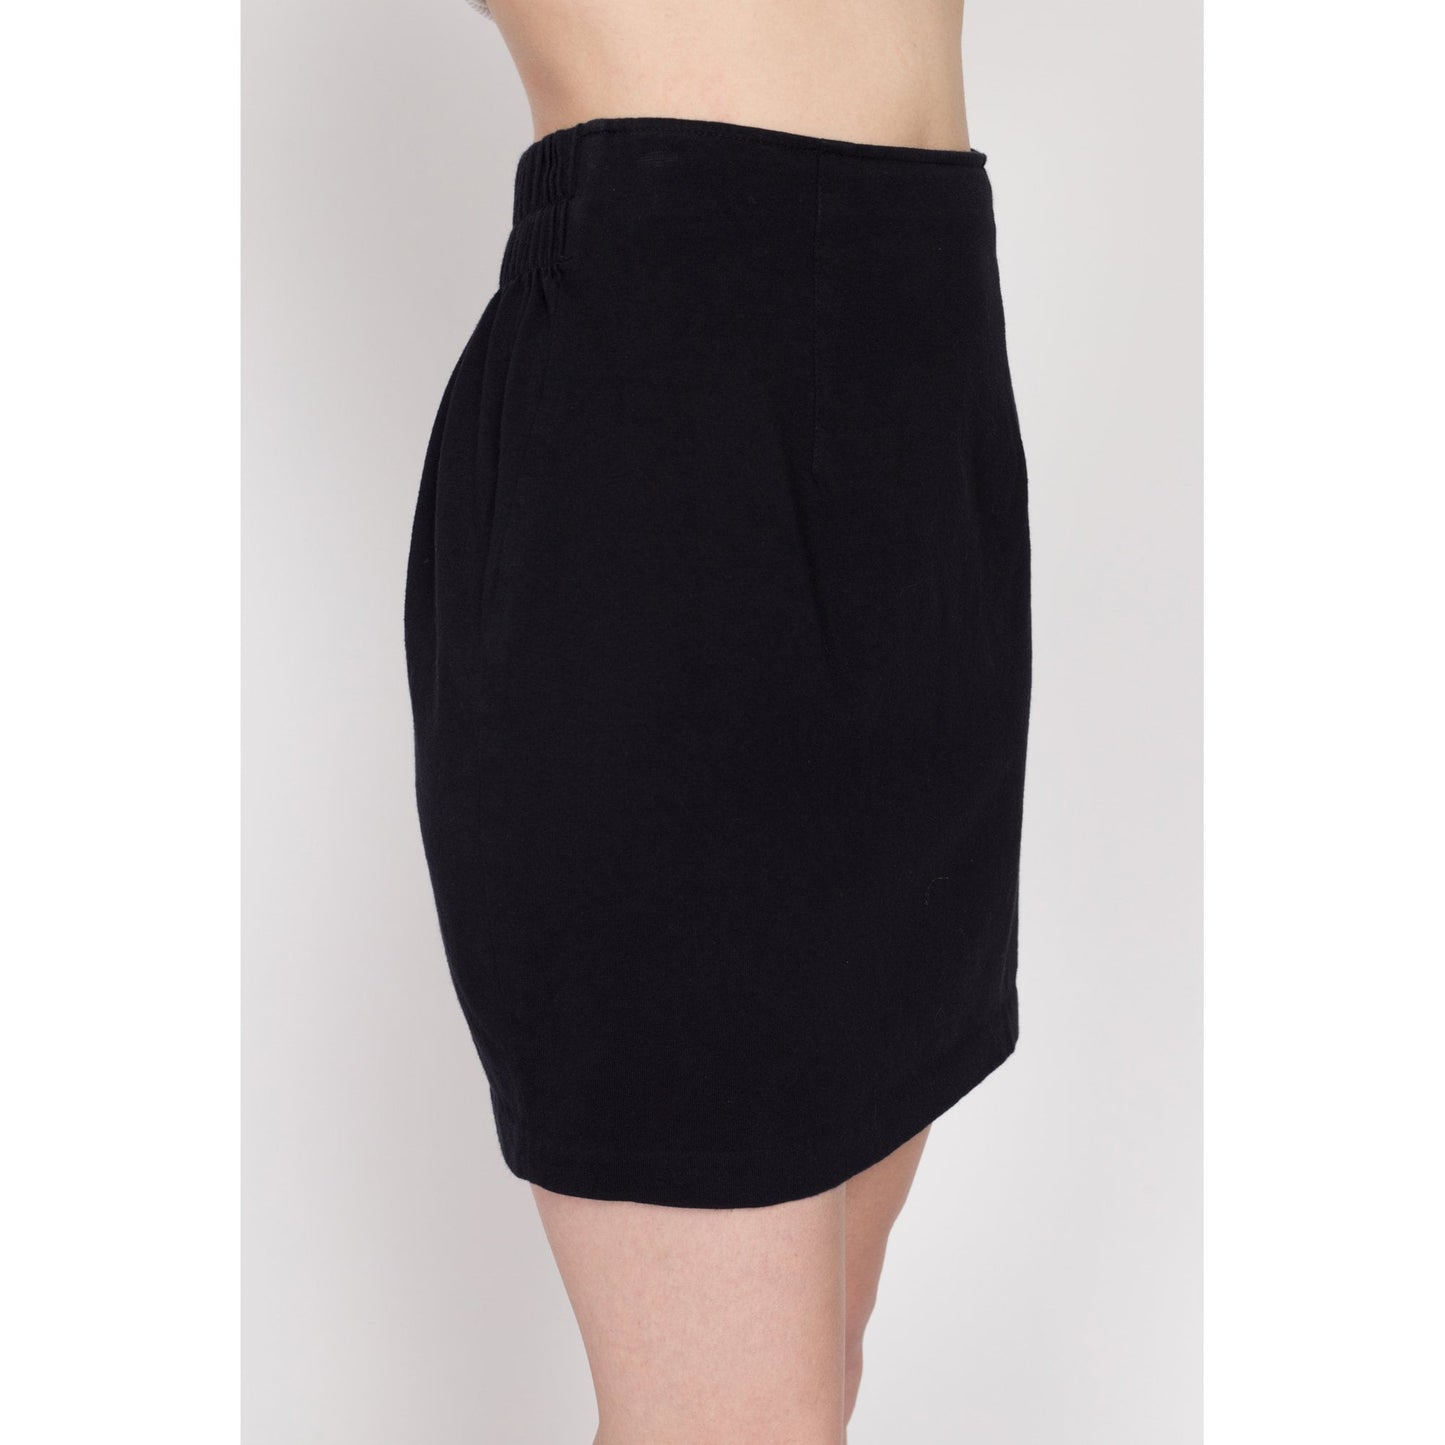 Sm-Med 90s Black Stretchy Fitted Mini Skirt | Vintage Minimalist Elastic High Waisted Plain Pencil Miniskirt